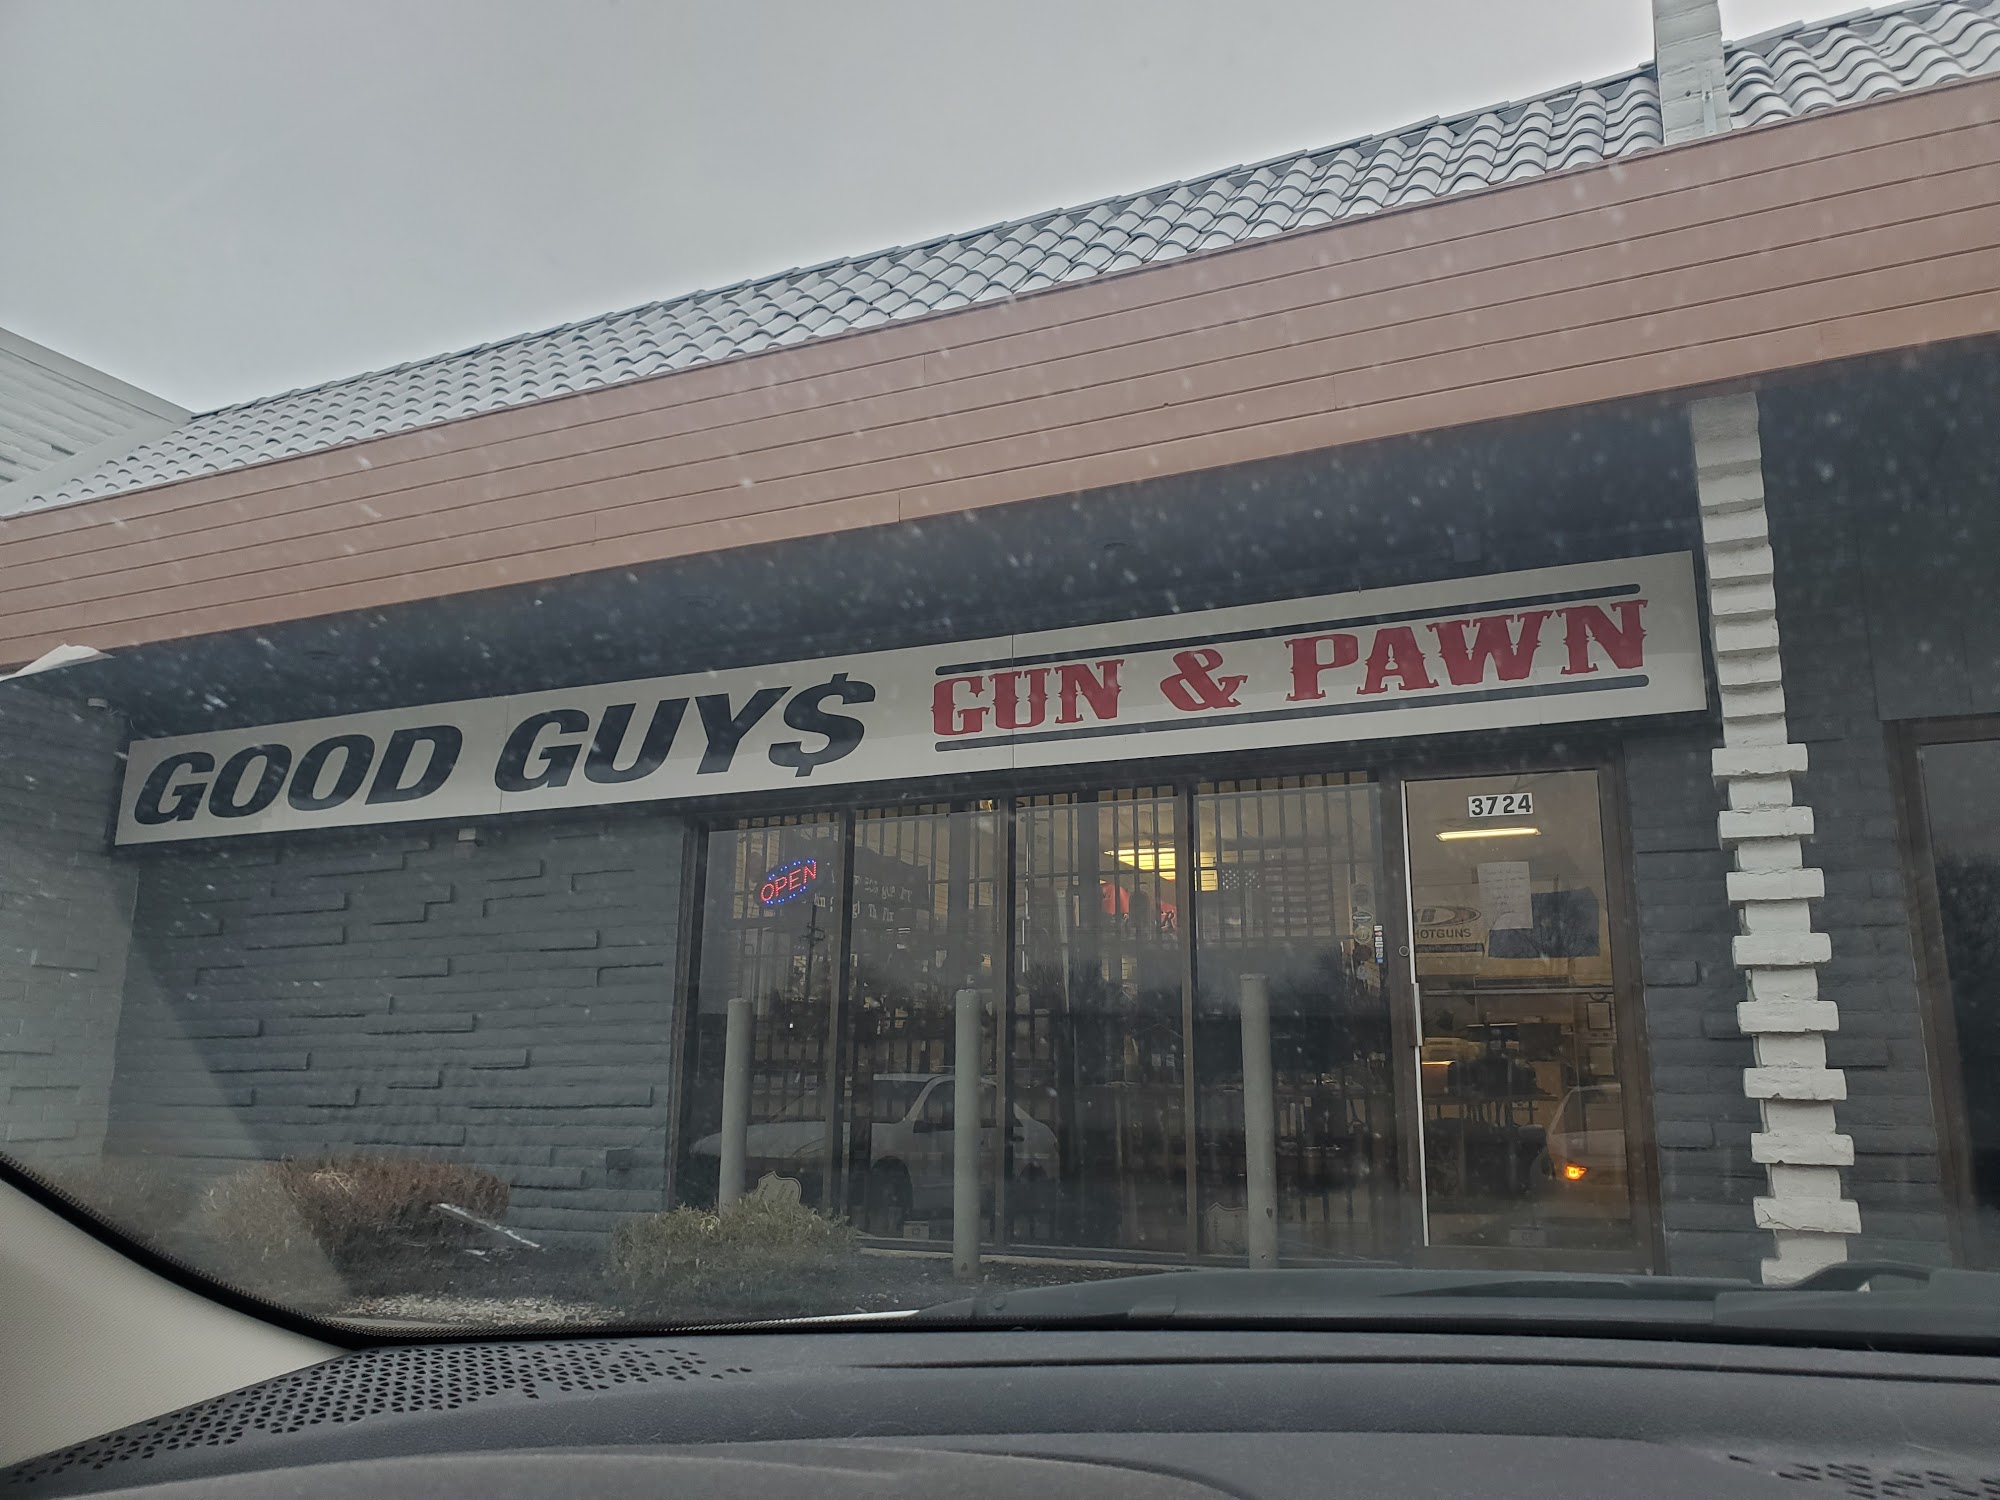 Good Guys Gun and Pawn